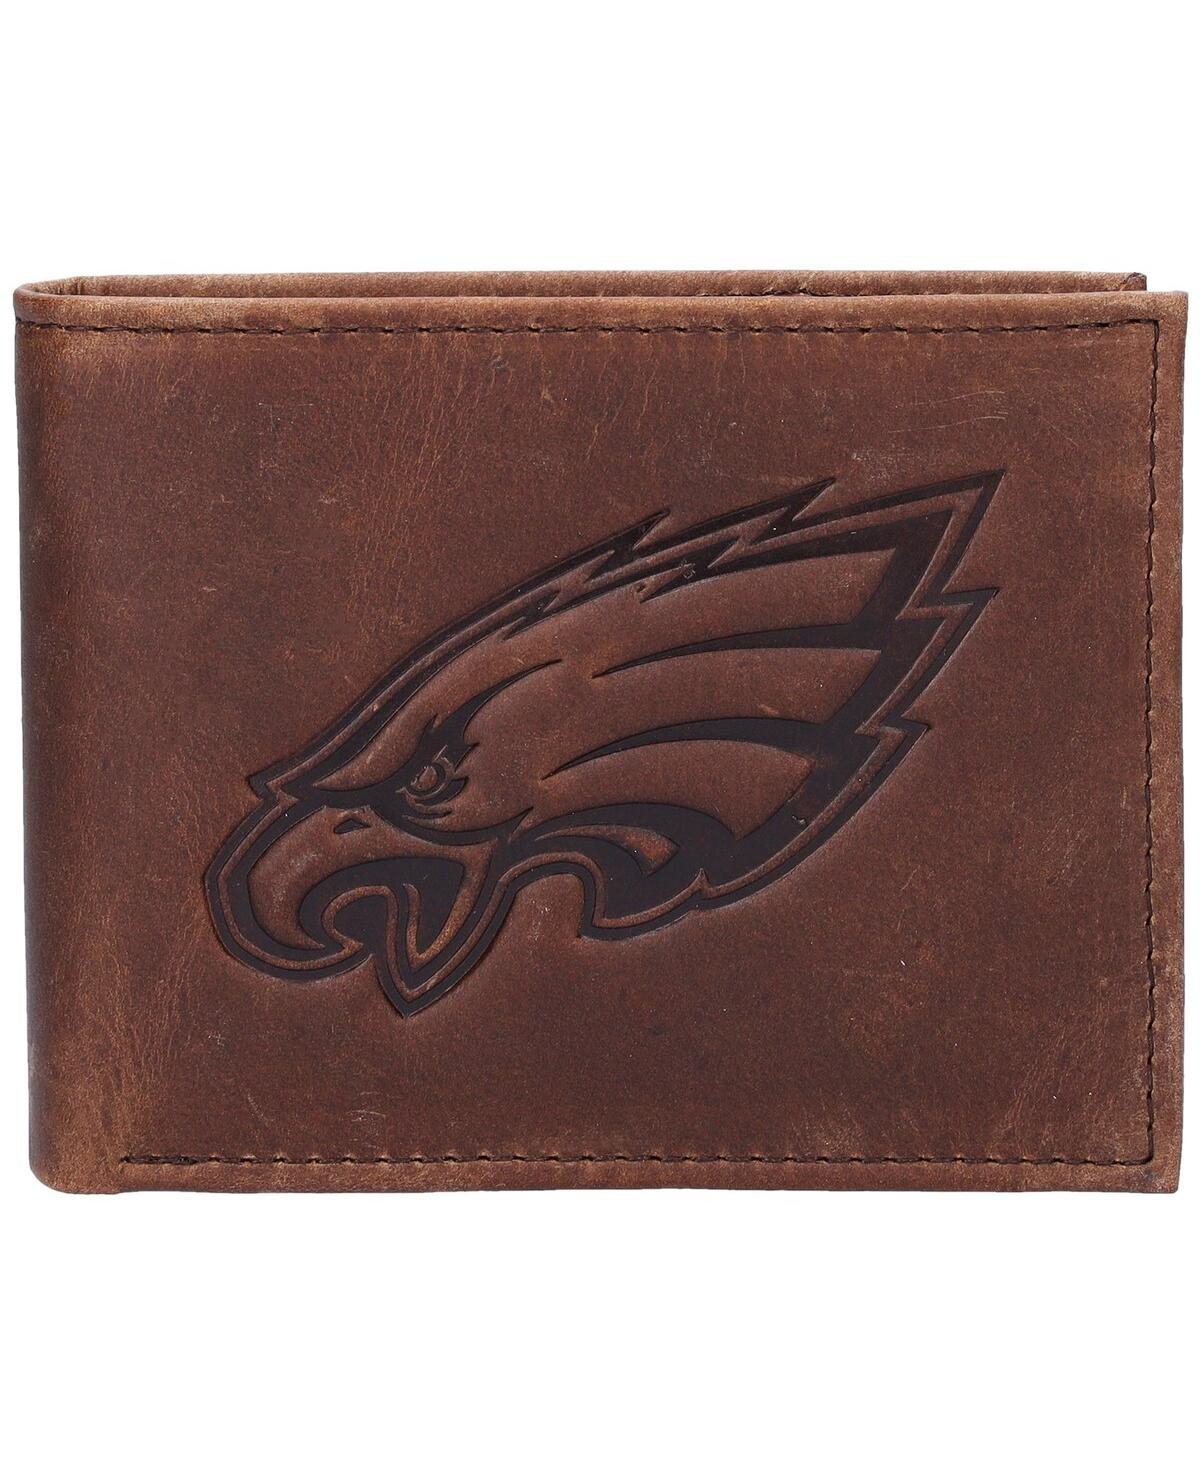 Evergreen Enterprises Men's Brown Philadelphia Eagles Bifold Leather Wallet